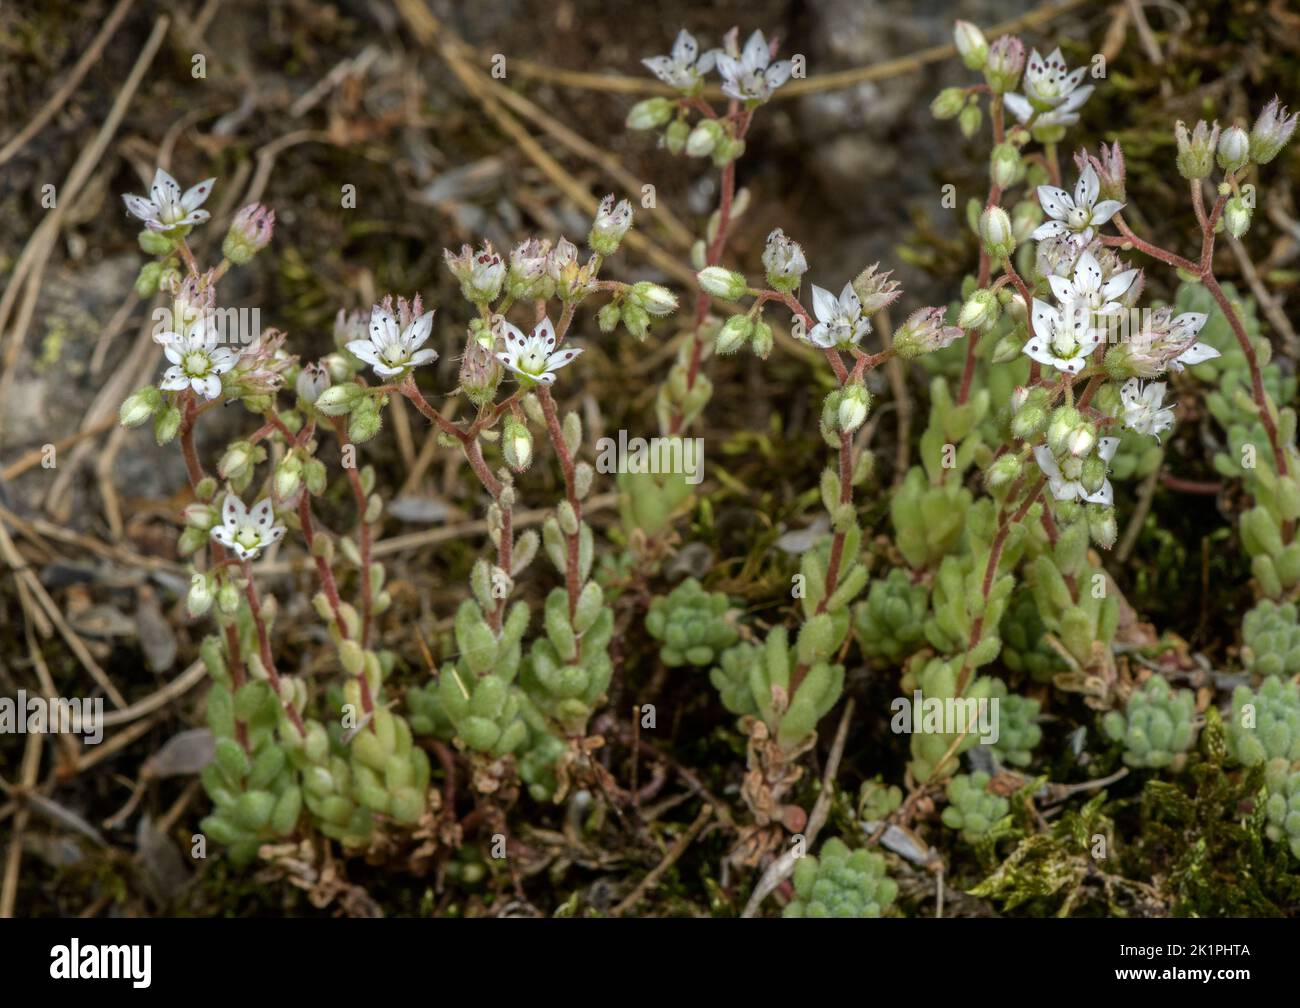 Hairy Stonecrop, Sedum hirsutum in flower in crevice of hard acidic rock, Pyrenees. Stock Photo